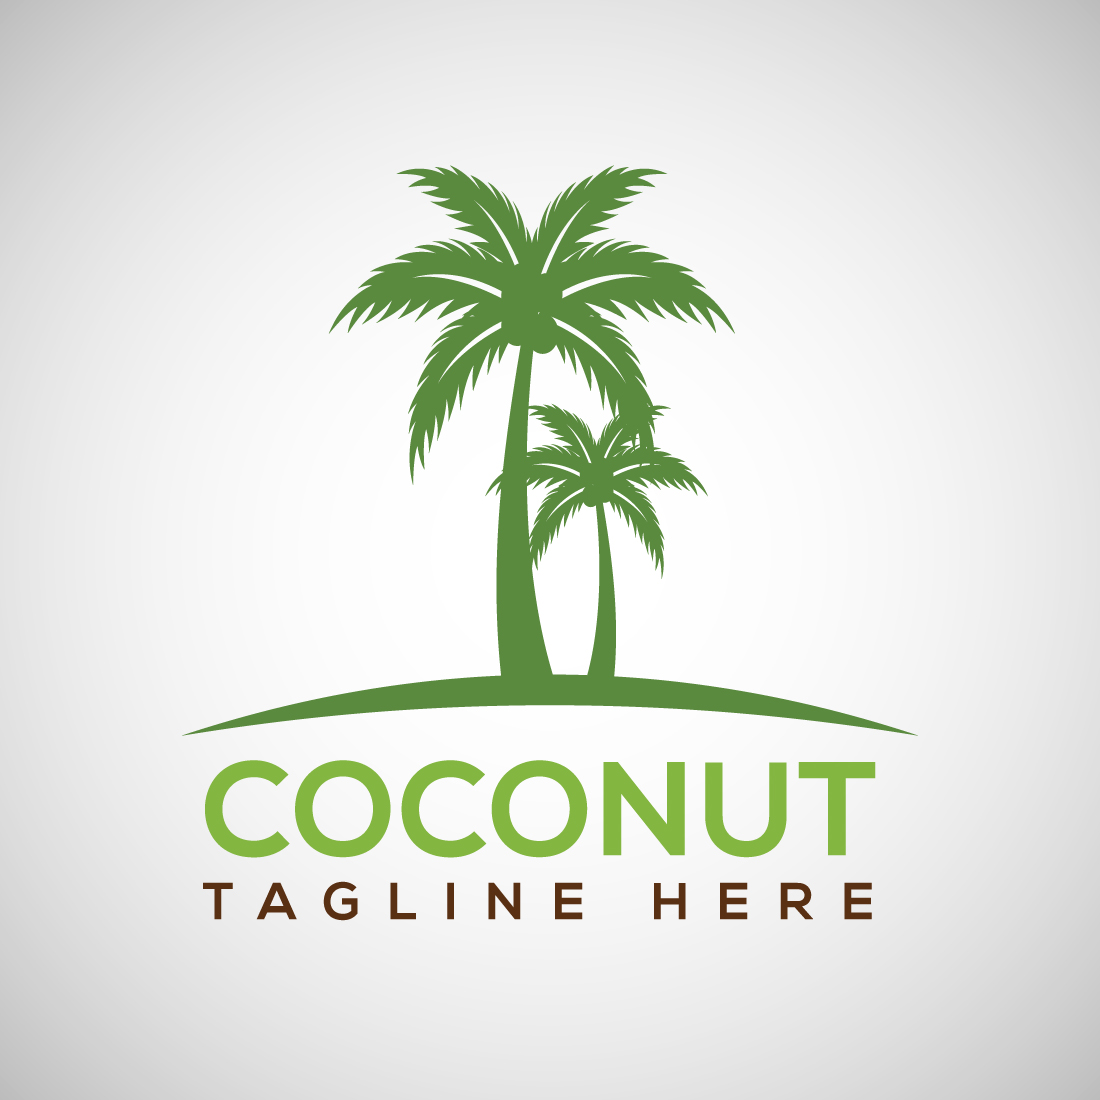 Vintage Coconut Tree Logo Minimalist Graphic by hsn42 · Creative Fabrica